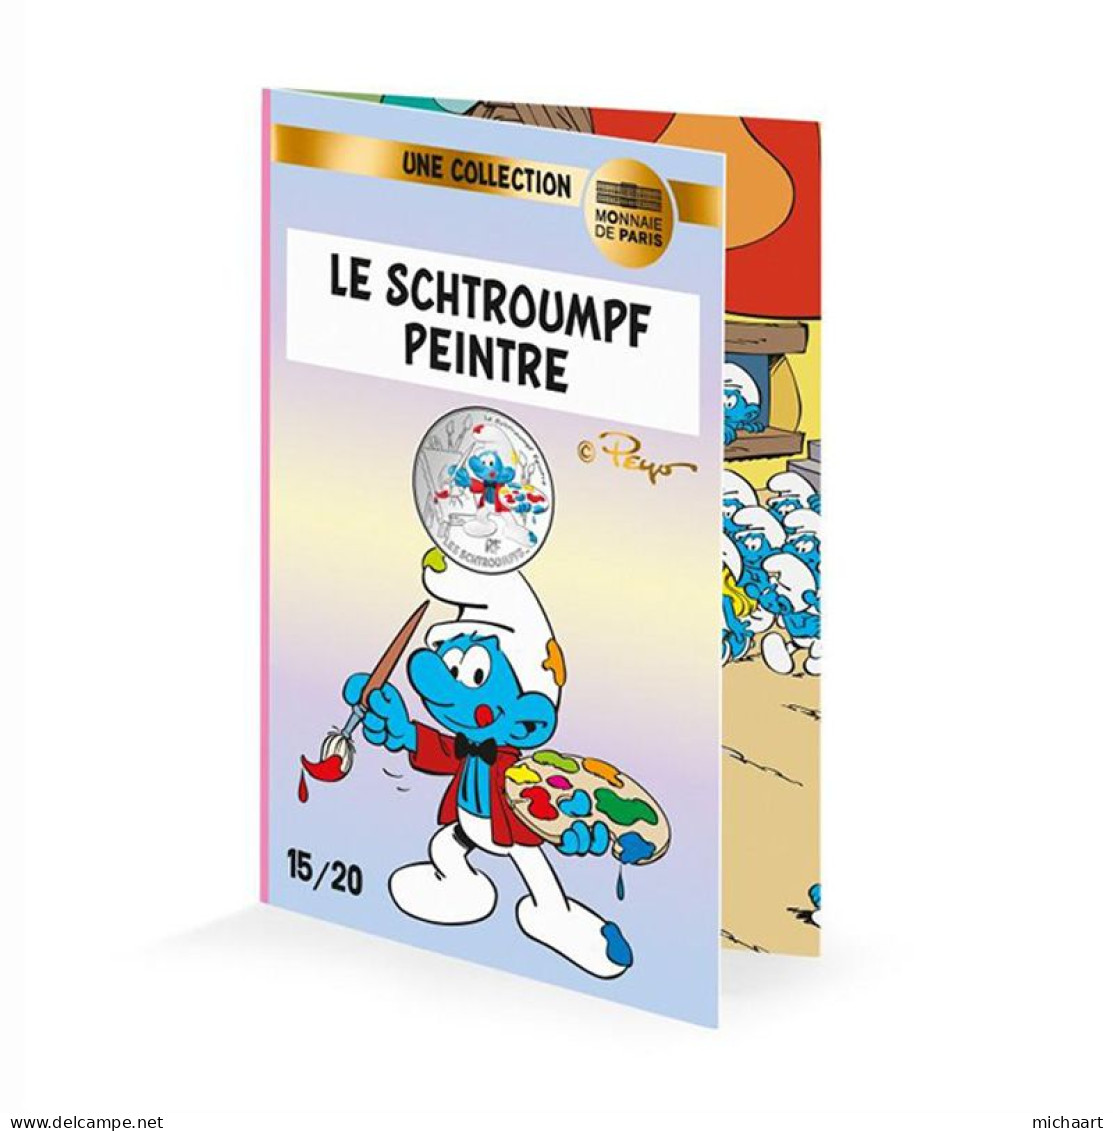 France 10 Euro Silver 2020 Painter The Smurfs Colored Coin Cartoon 01852 - Gedenkmünzen